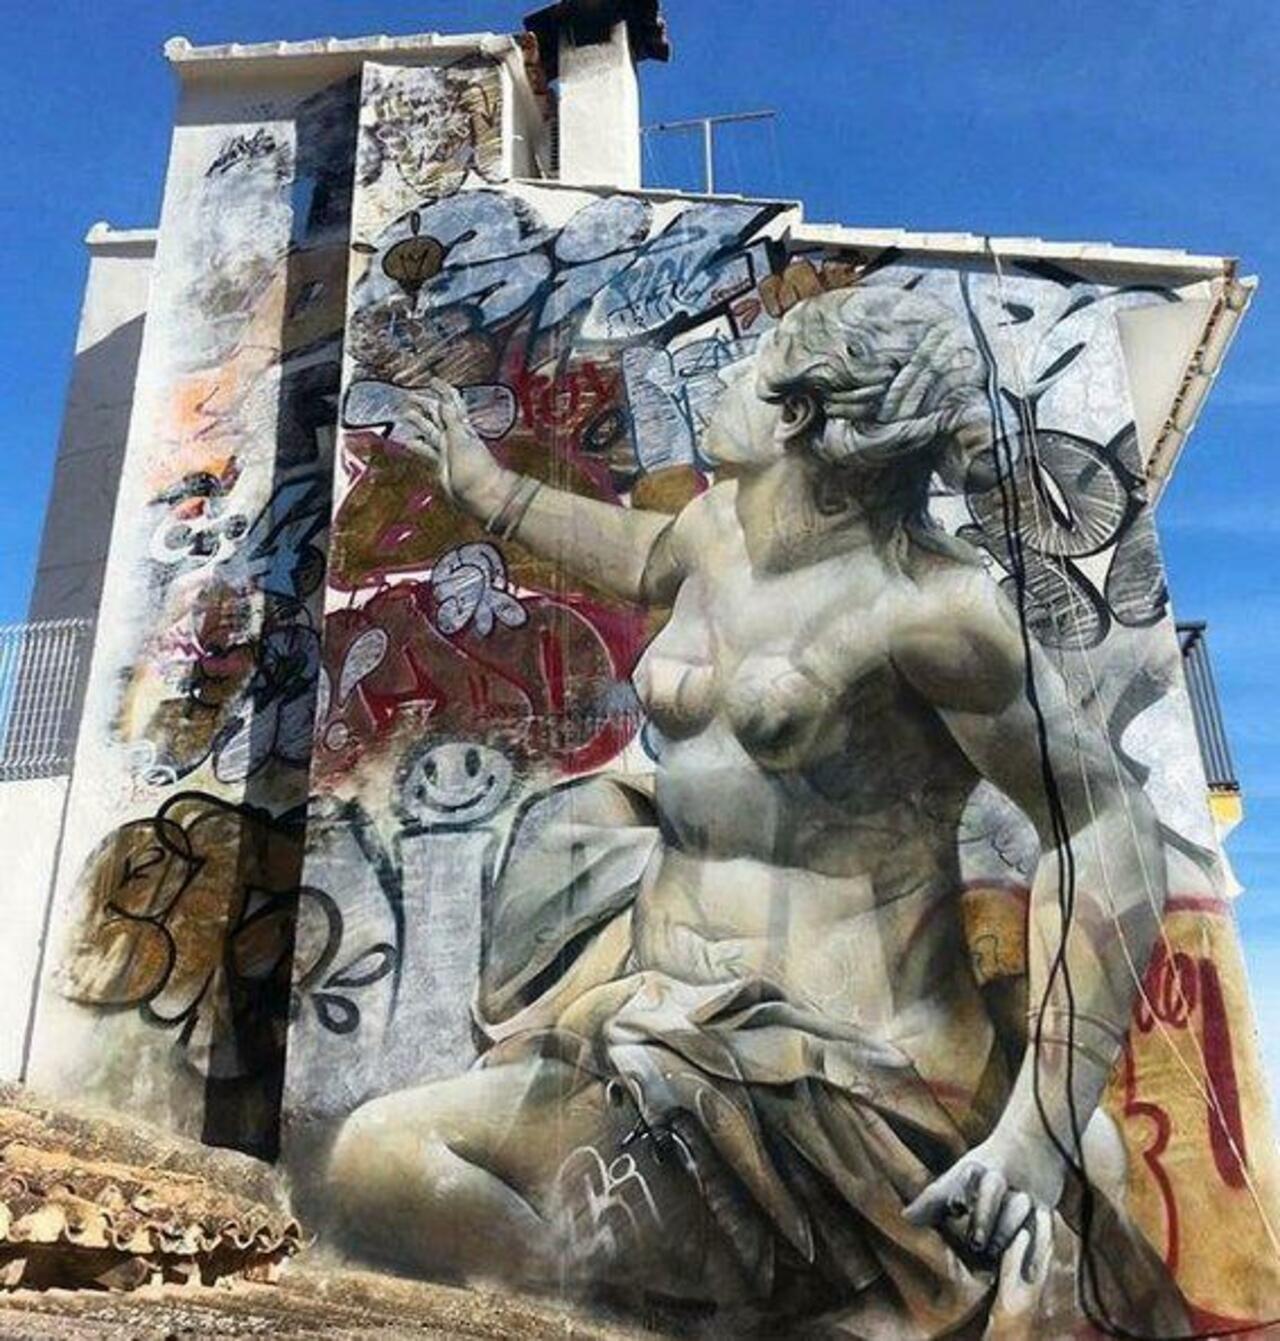 Pichi&Avo in Faranza, Spain
#StreetArt #Mural #beautiful #art #fineart #graffiti http://t.co/xFI8IL0n85